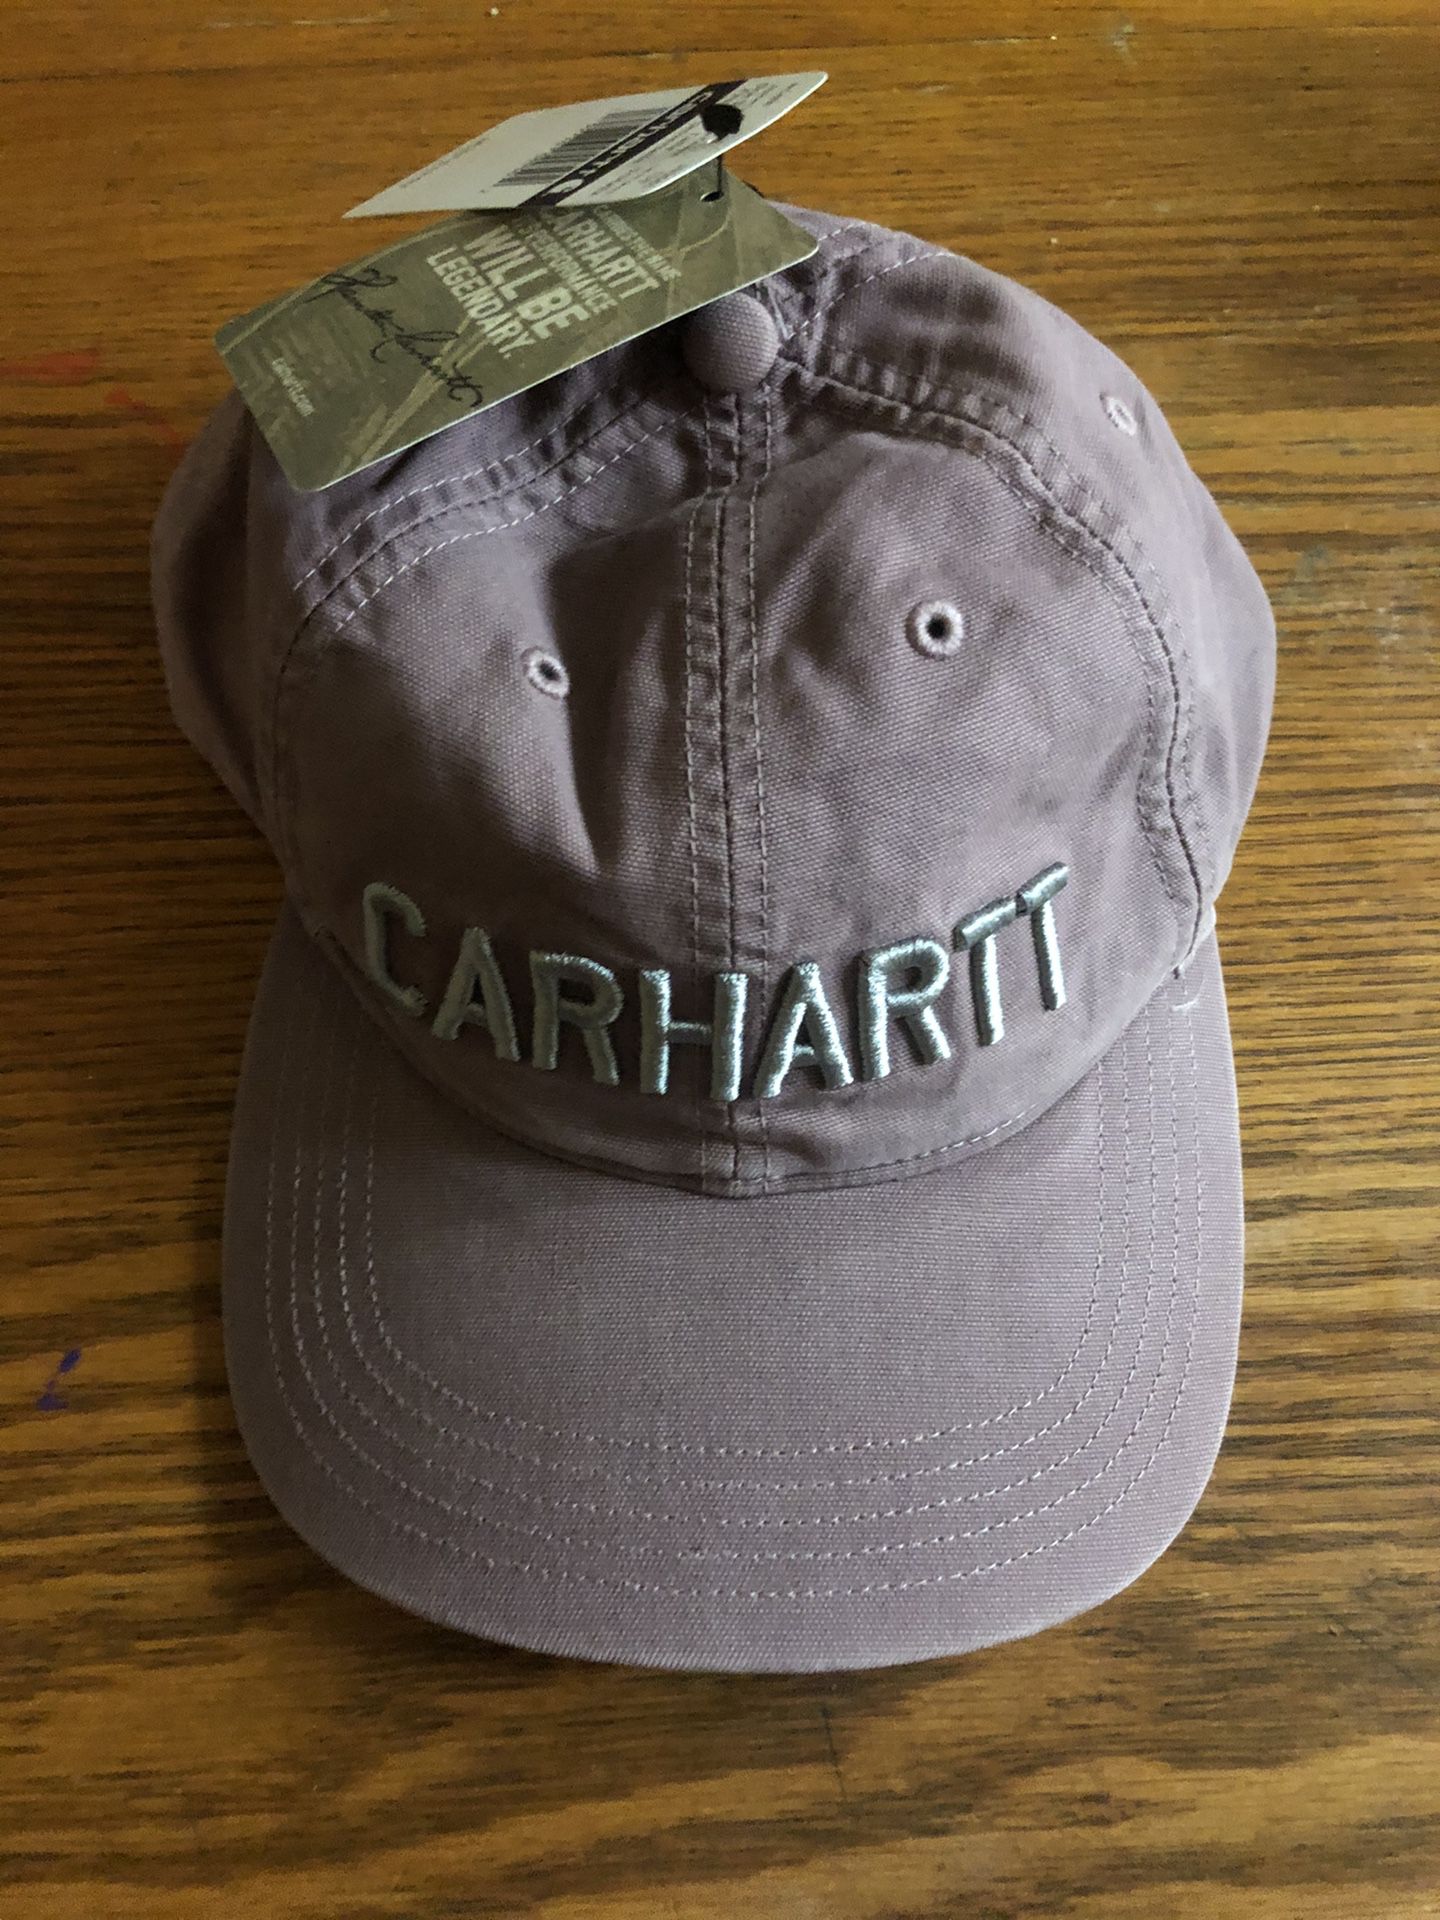 Carhartt woman’s hat